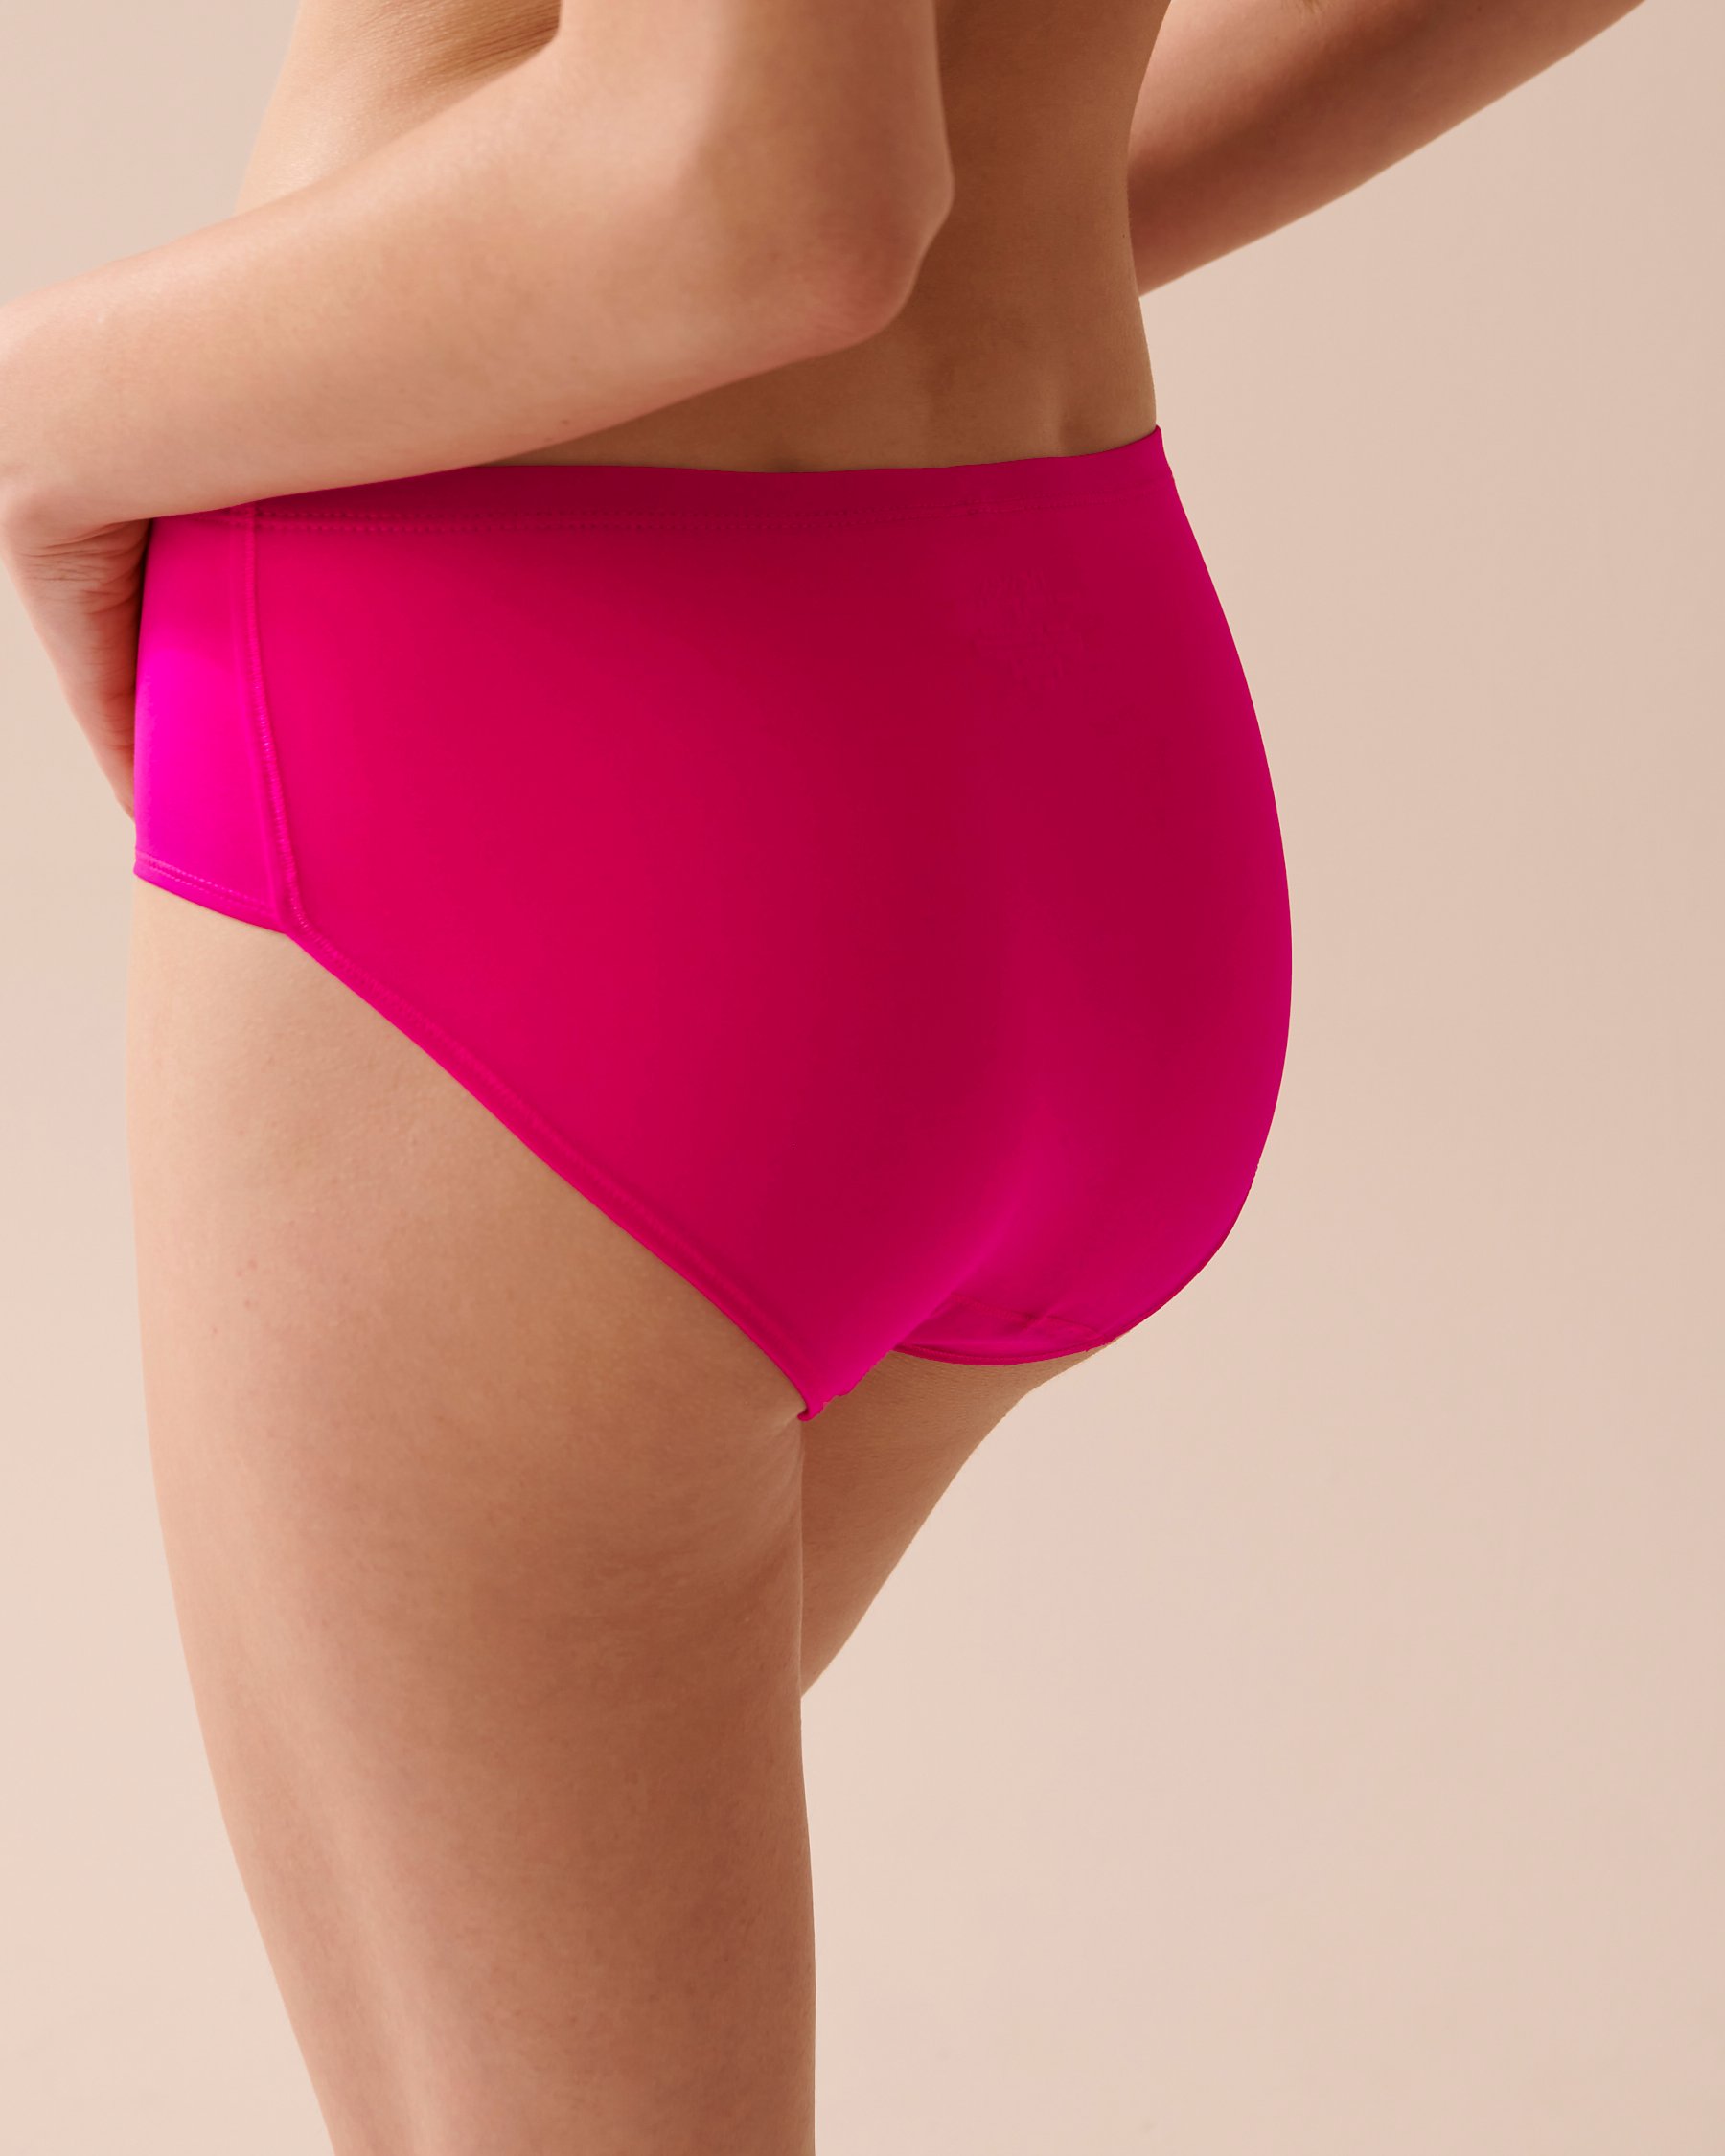 Hiphugger Period Panty by Newex - Bright Fuchsia